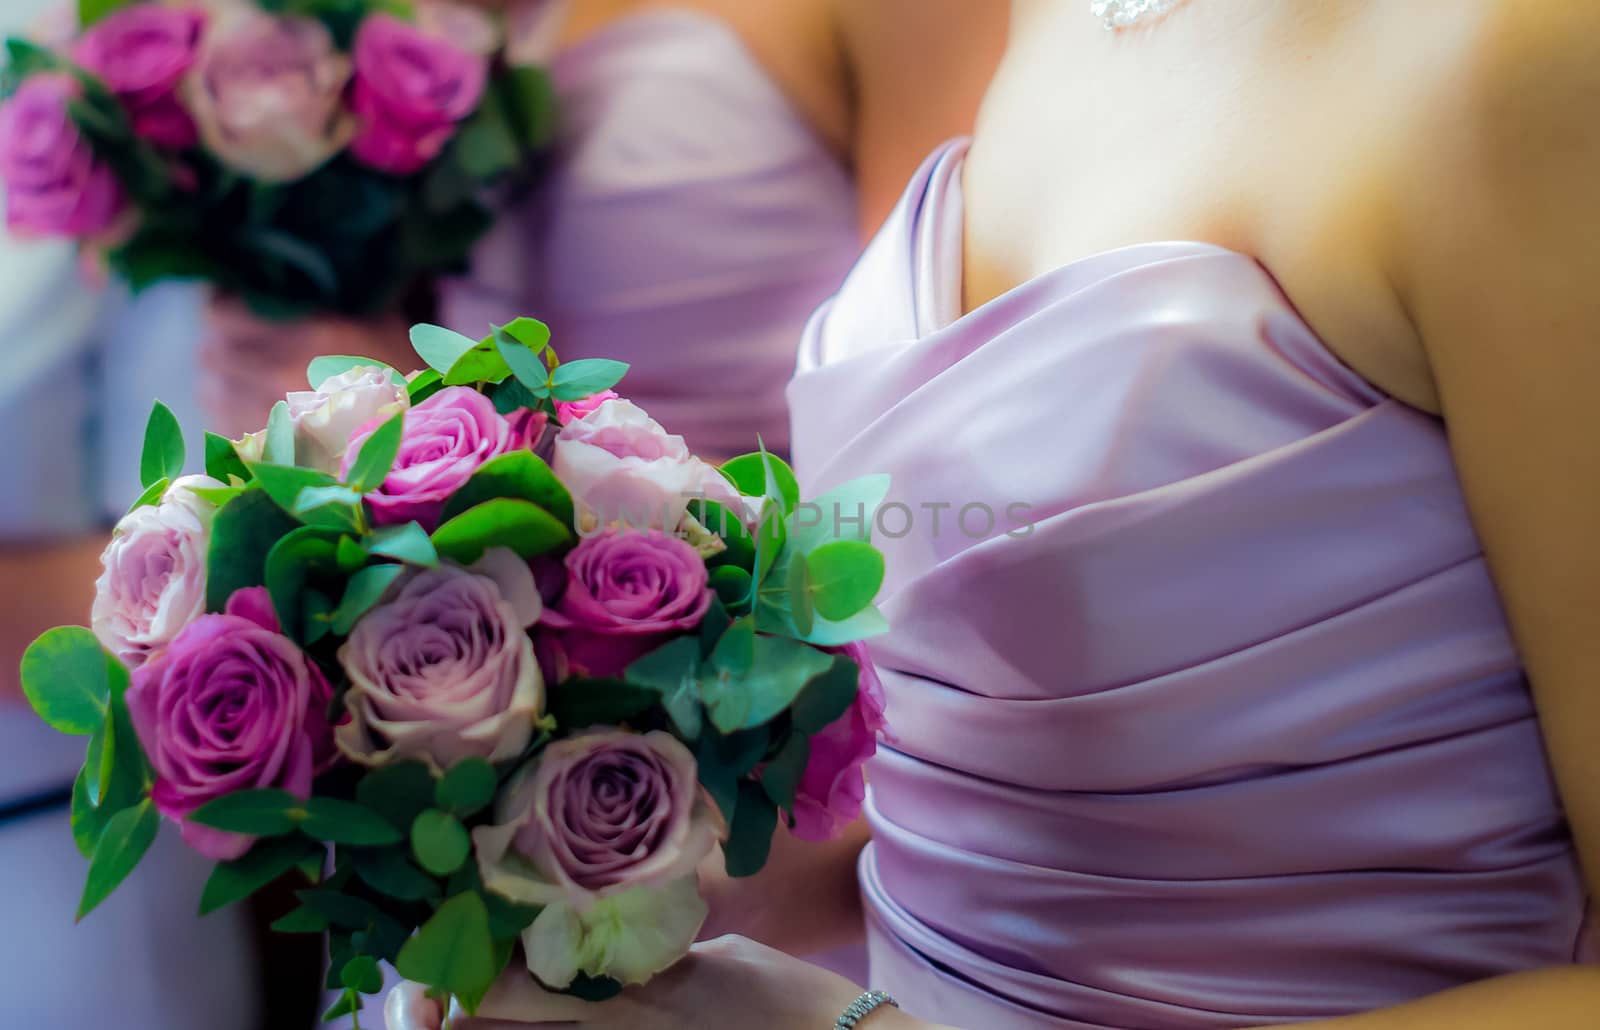 Bridesmaids Holding Colorful Wedding Bouquets by PhotoLondonUK